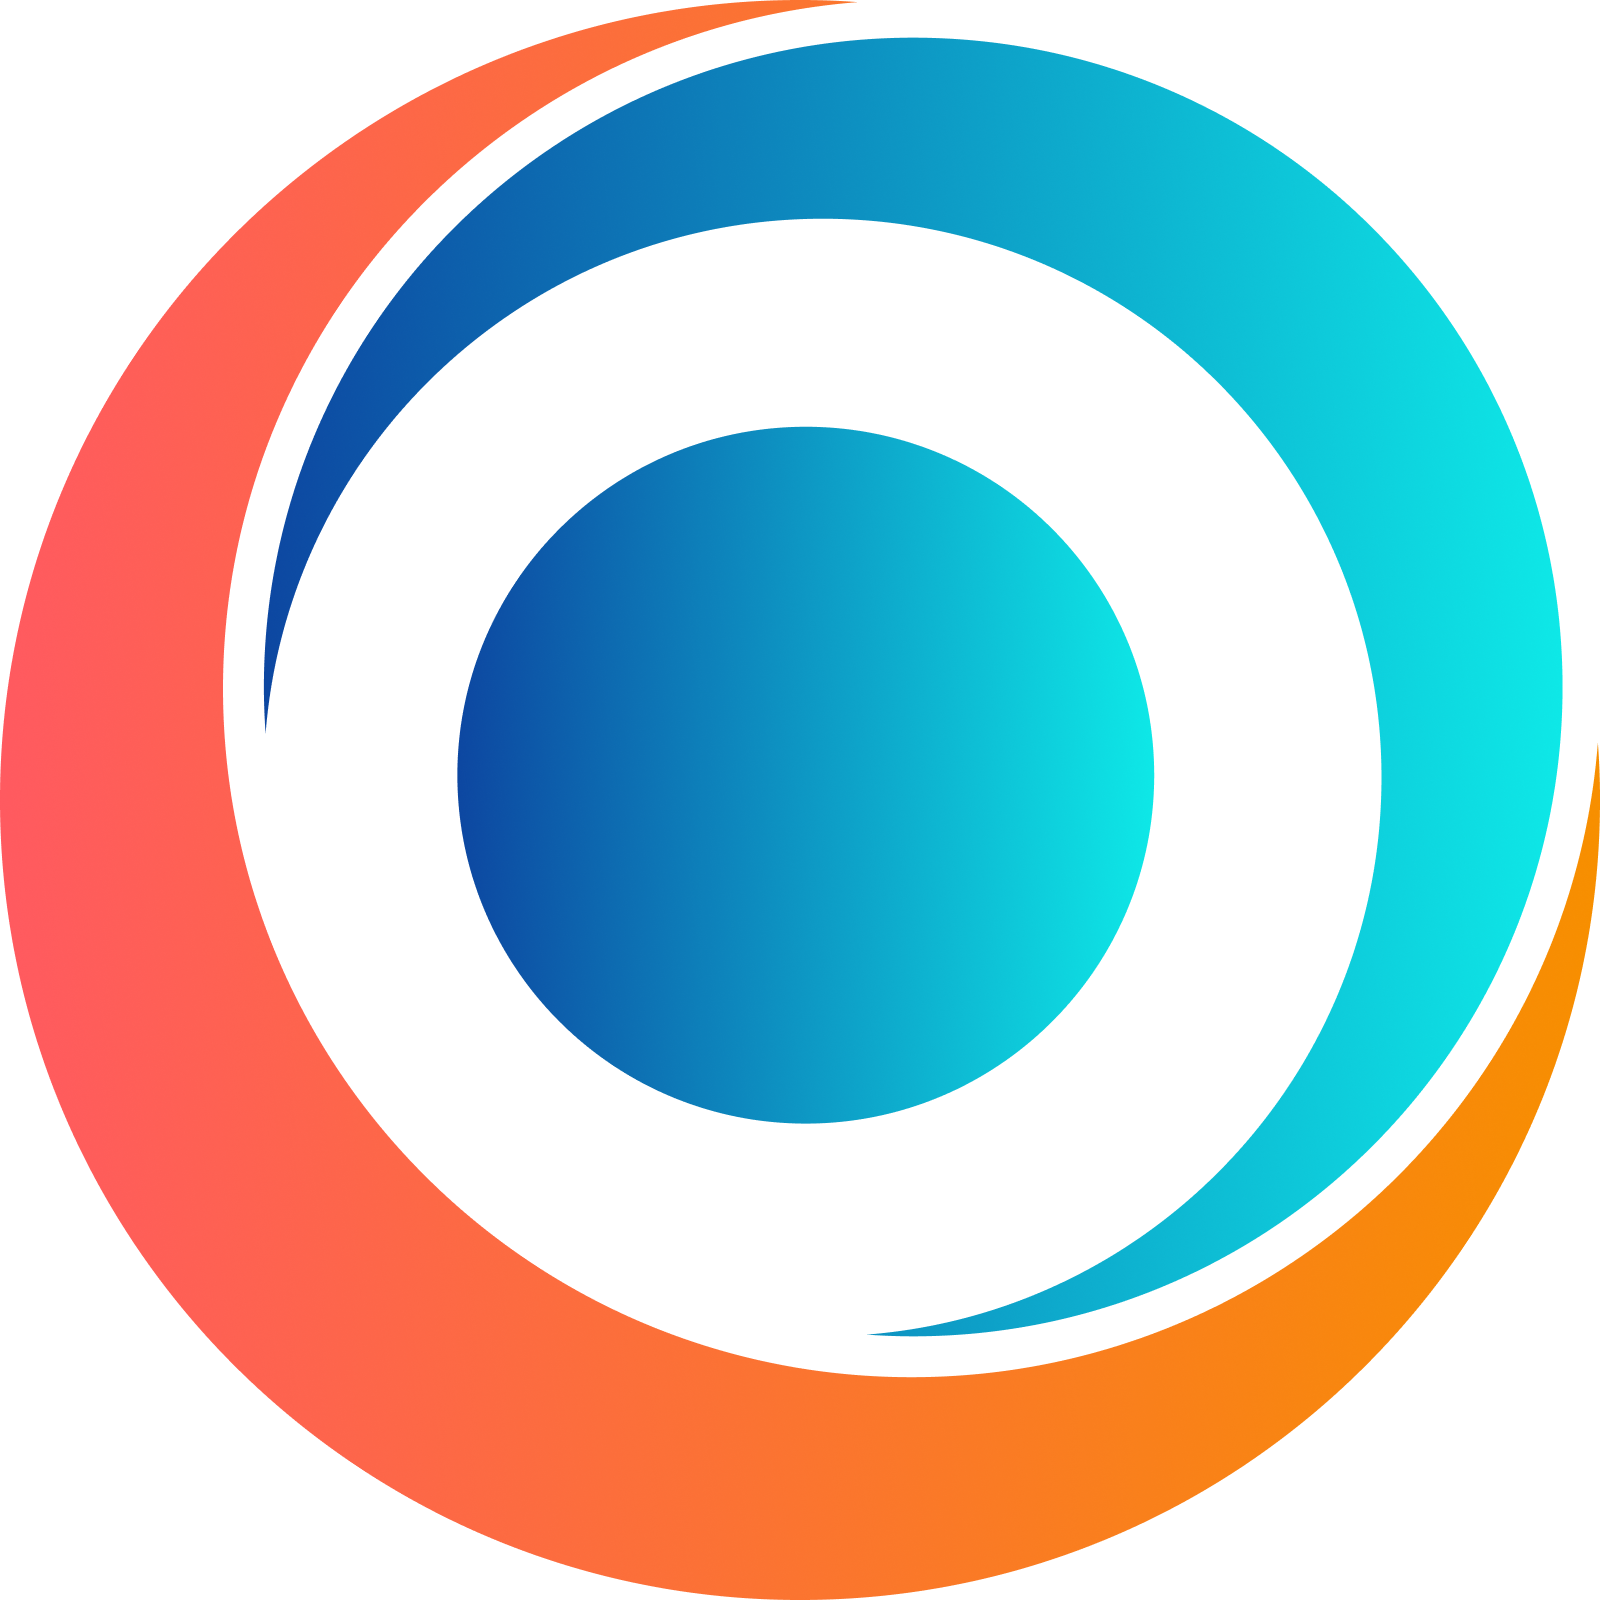 Oreka logo